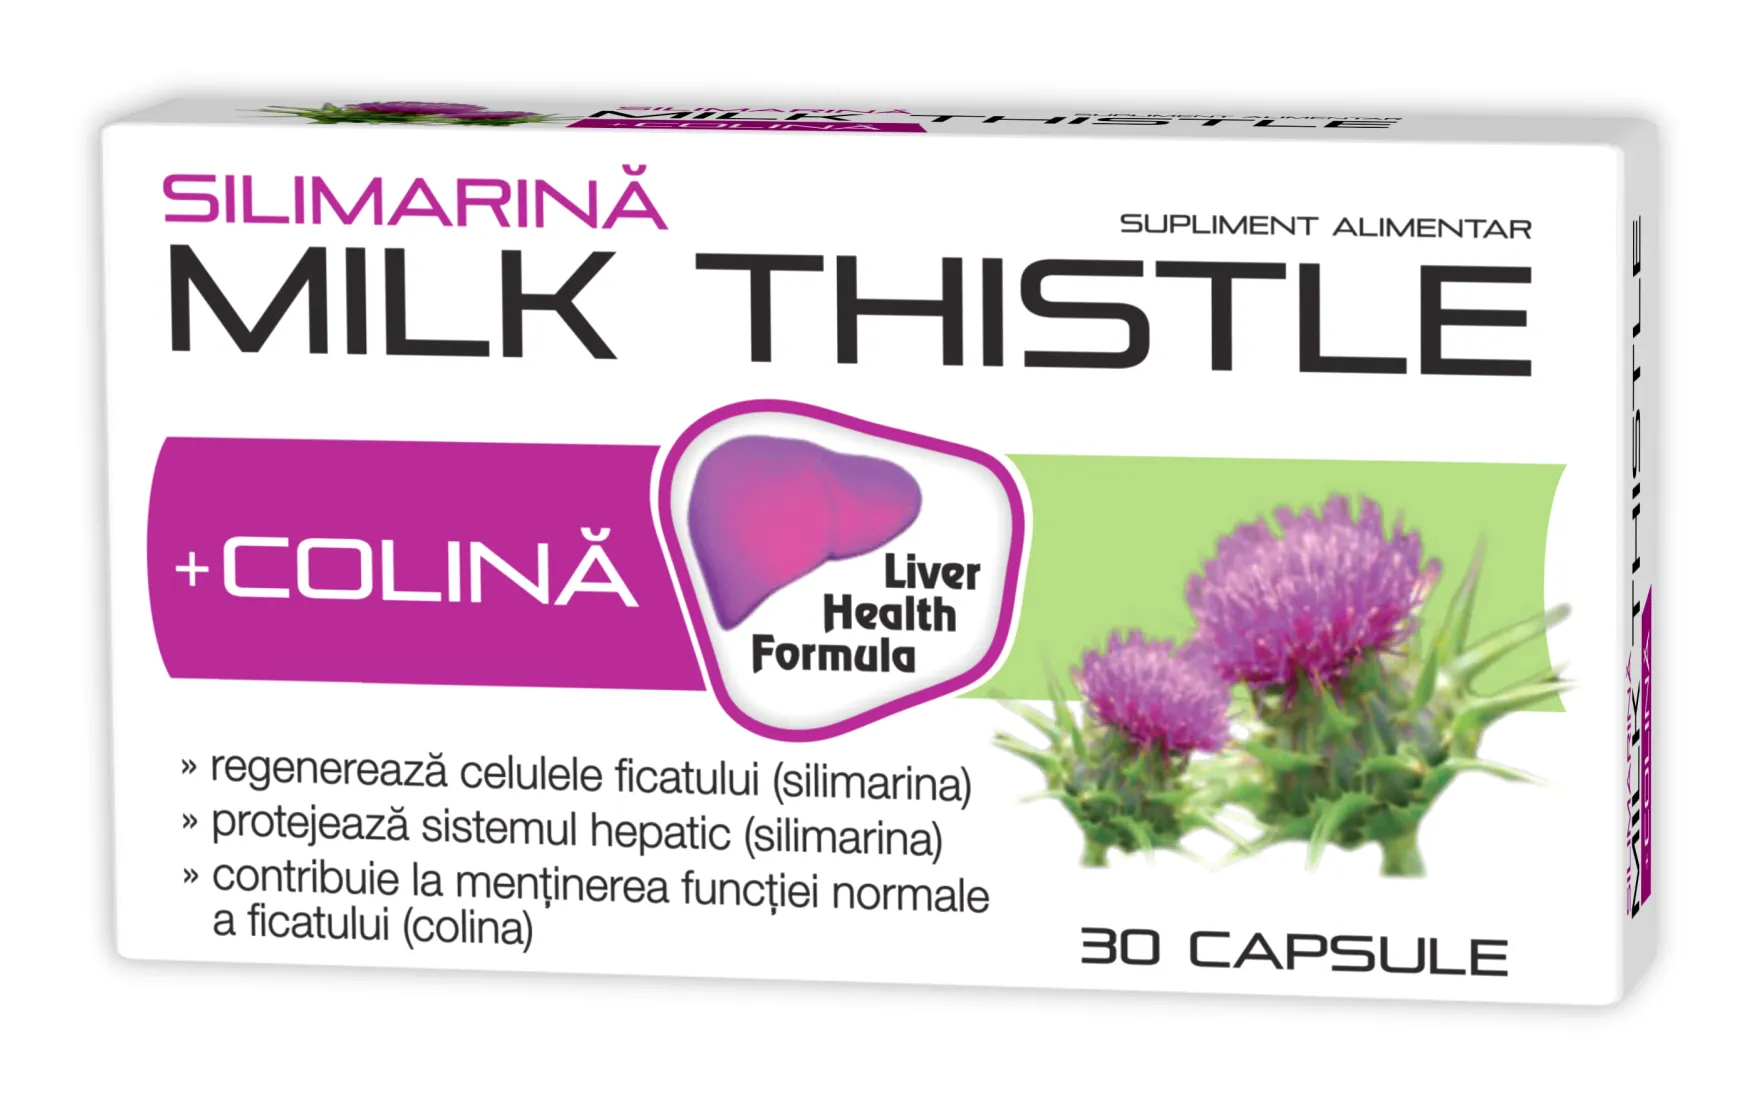 Silimarina + Colina Milk Thistle 1000mg, 30 capsule, Zdrovit